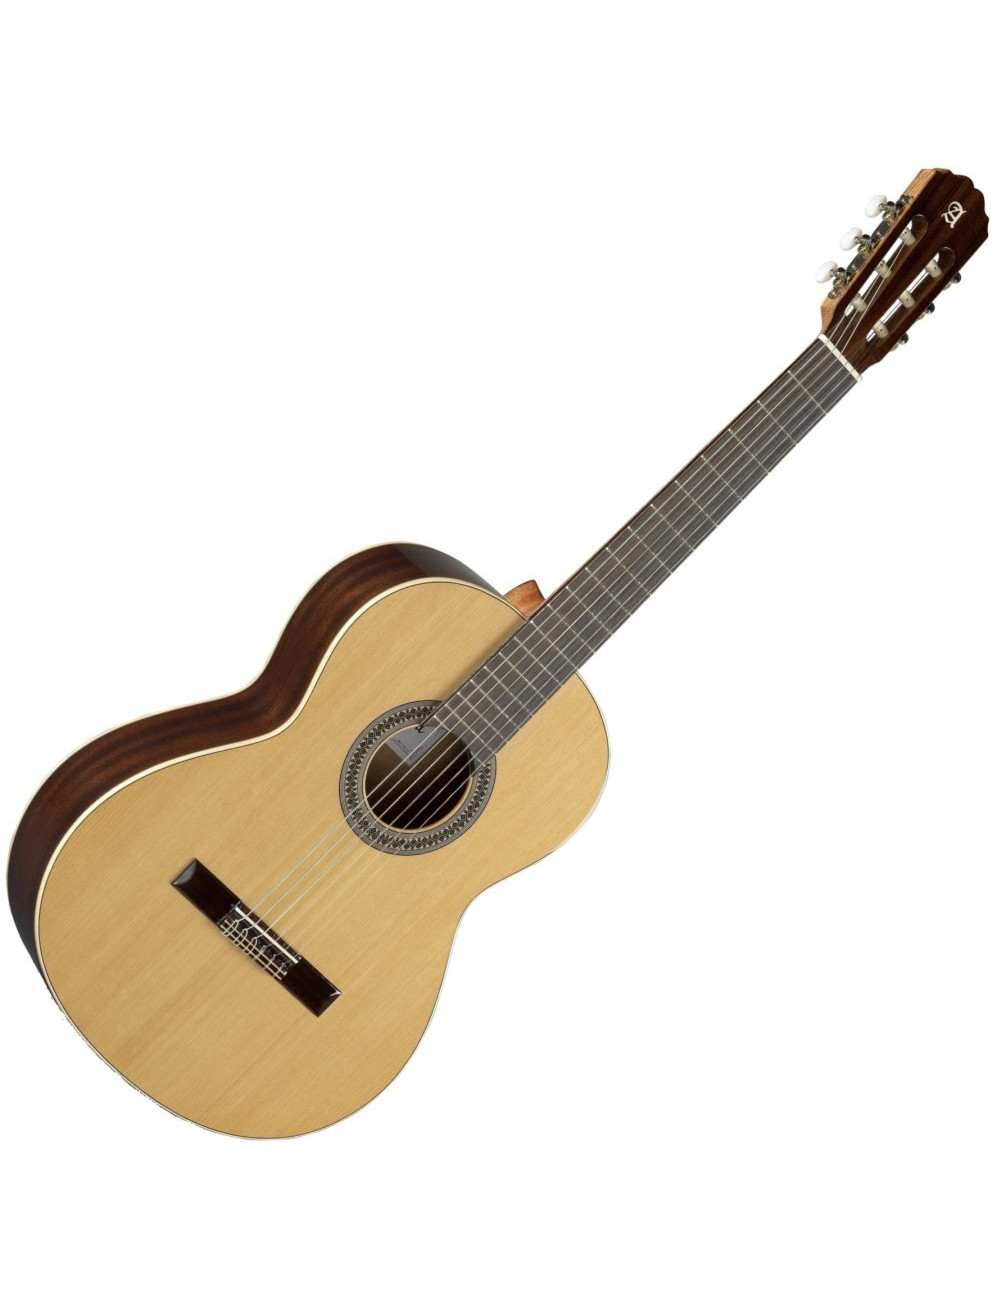 Alhambra 2CA gitara klasyczna